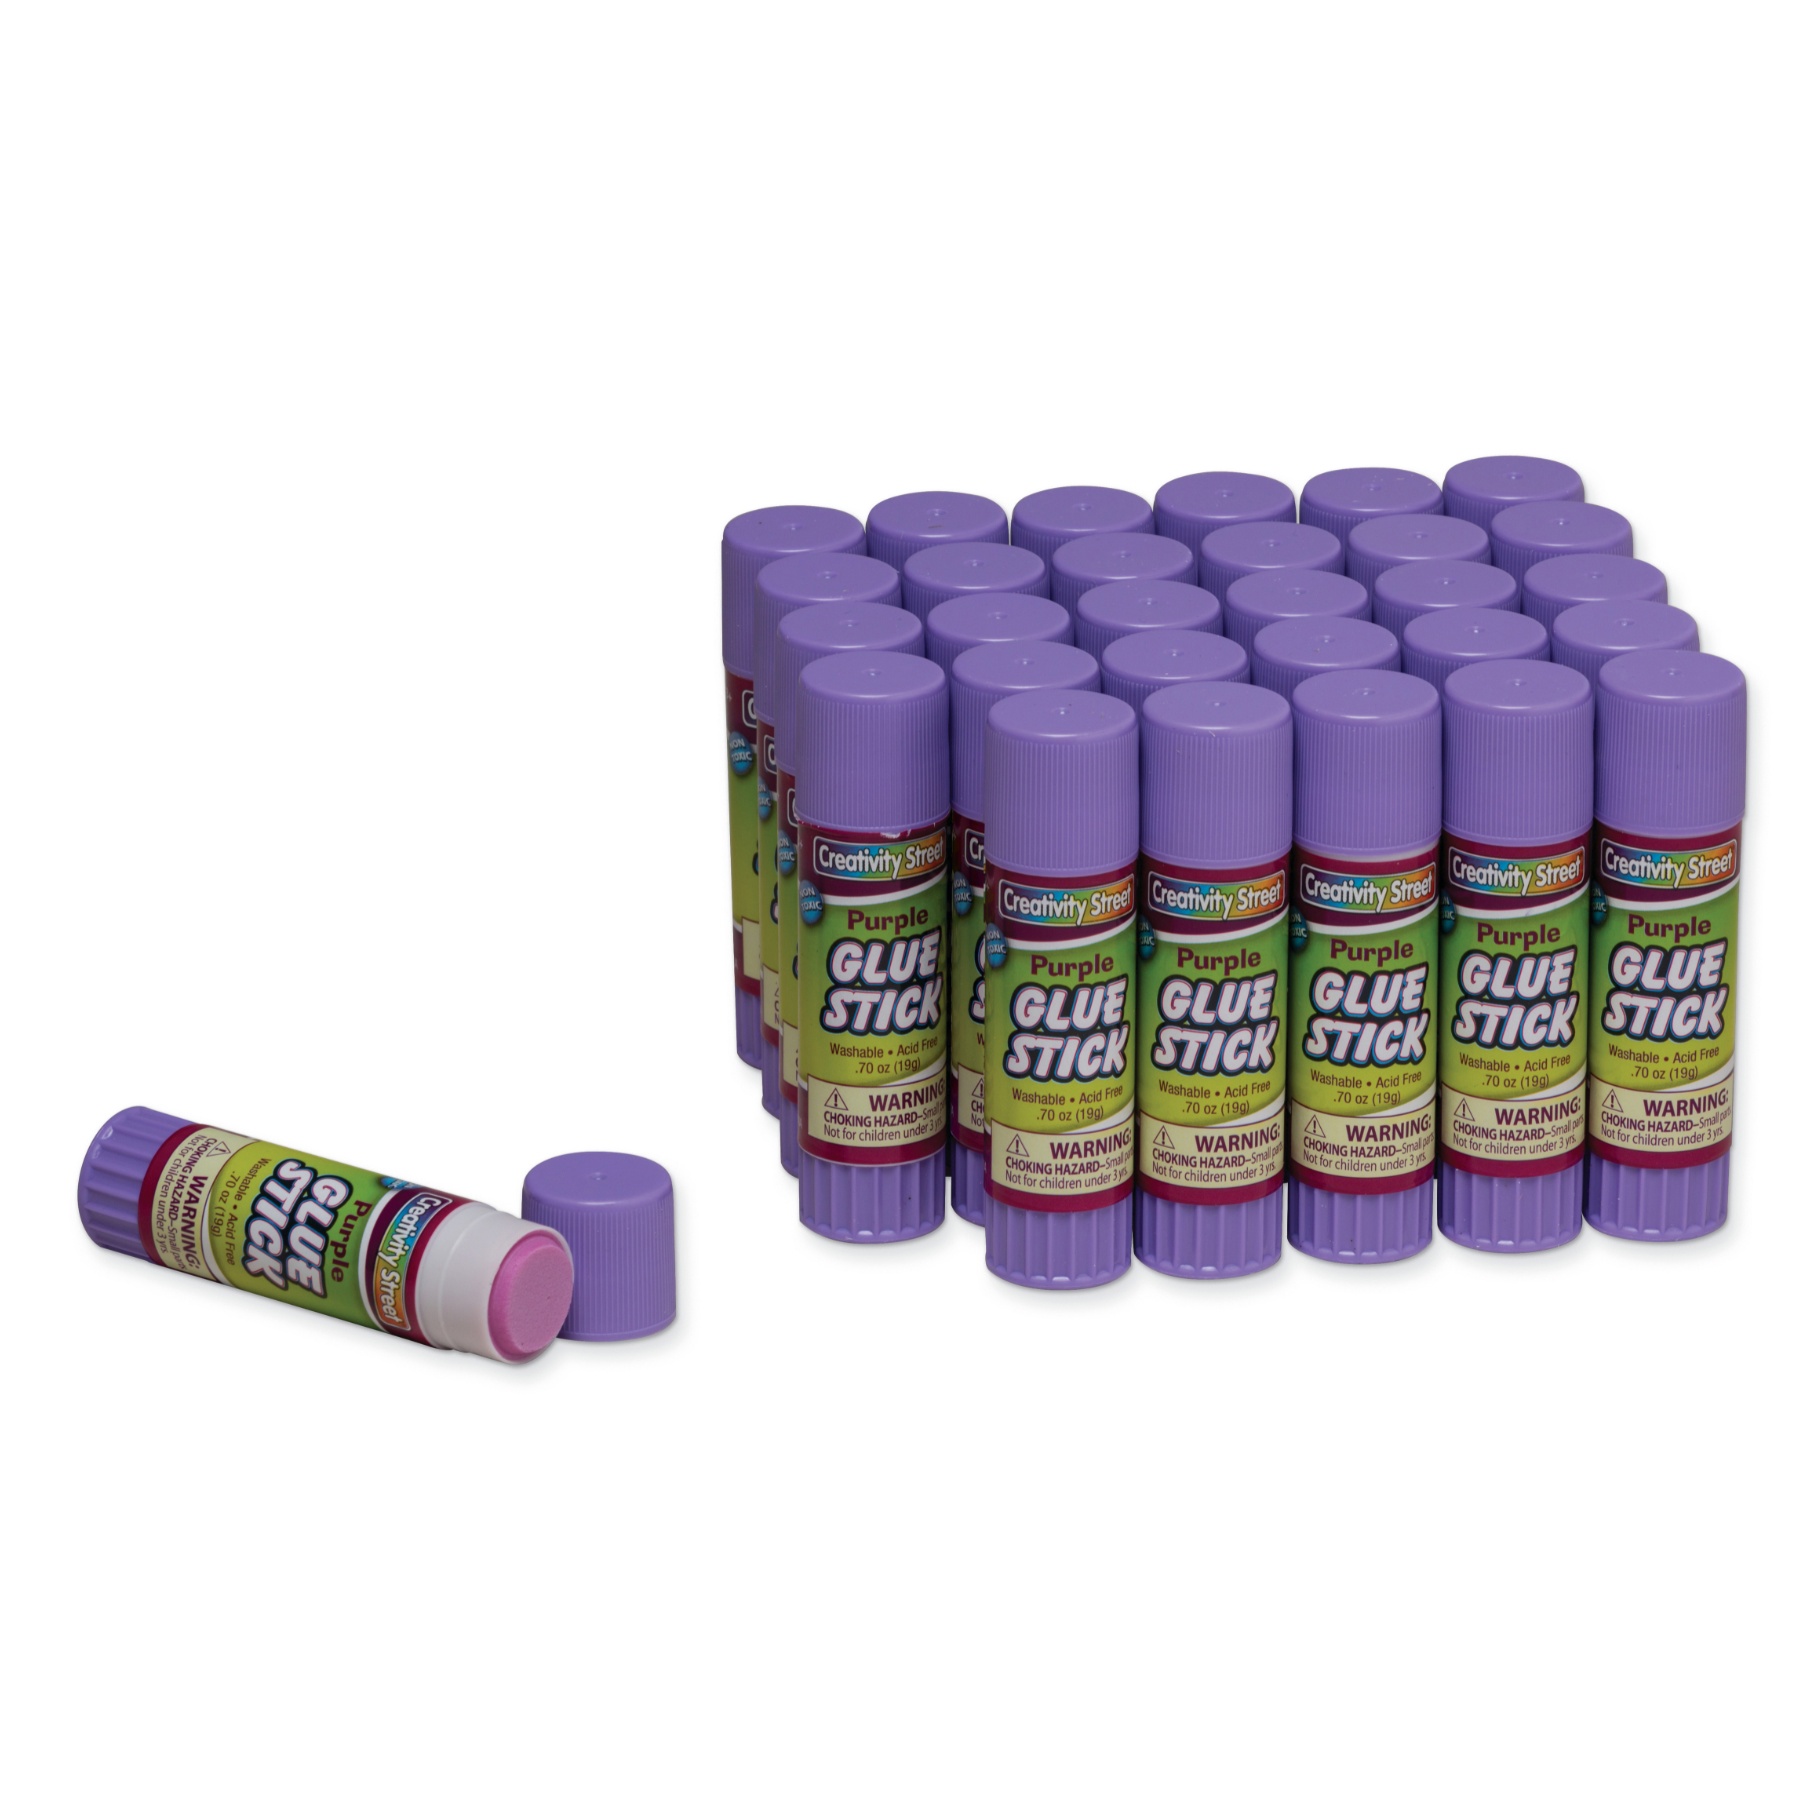 UHU Stic Magic Glue Stick Pack of 12 40g Extra Large Solvent Free